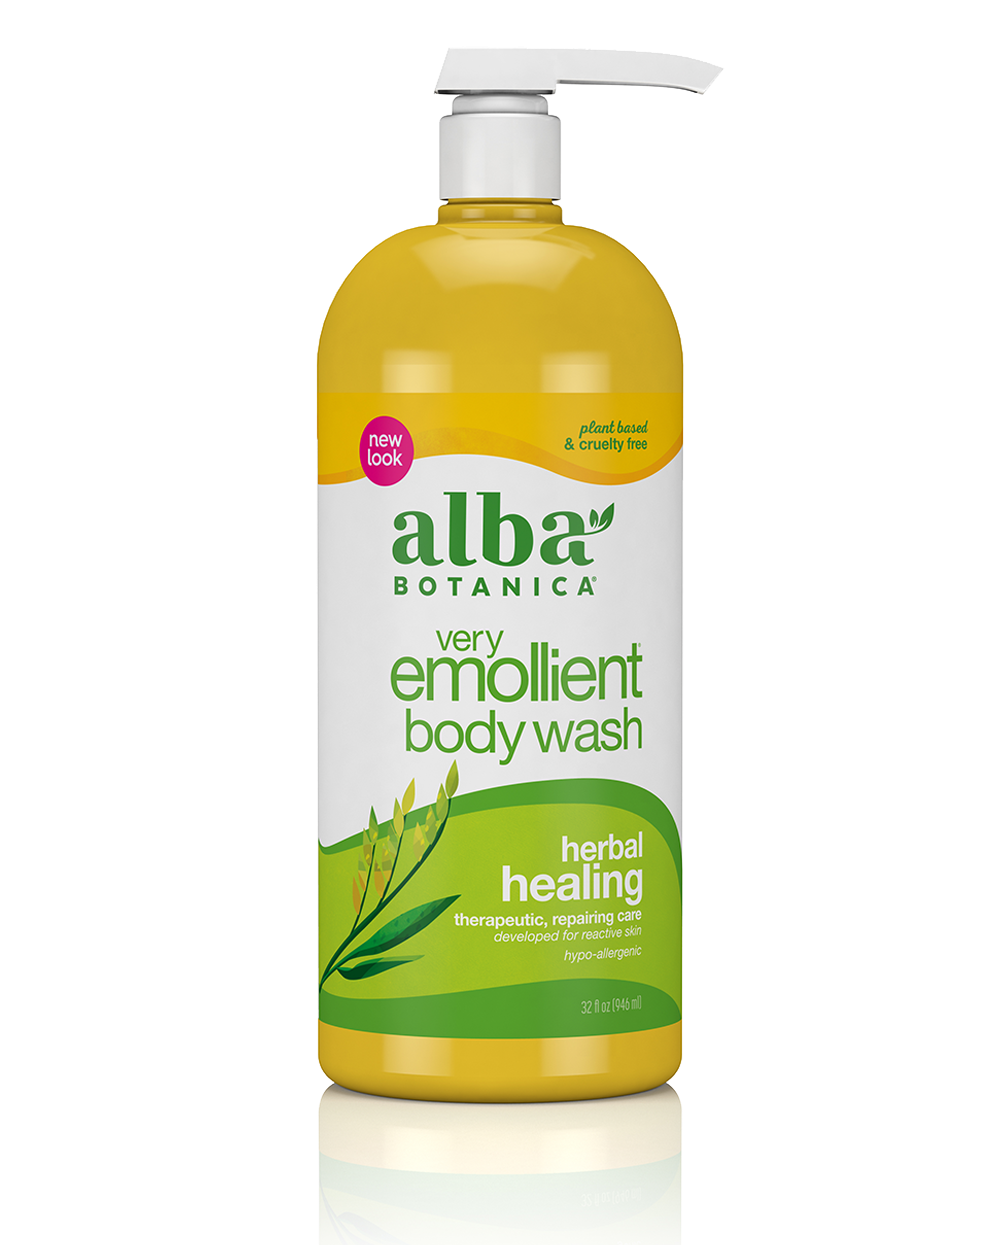 Alba body wash